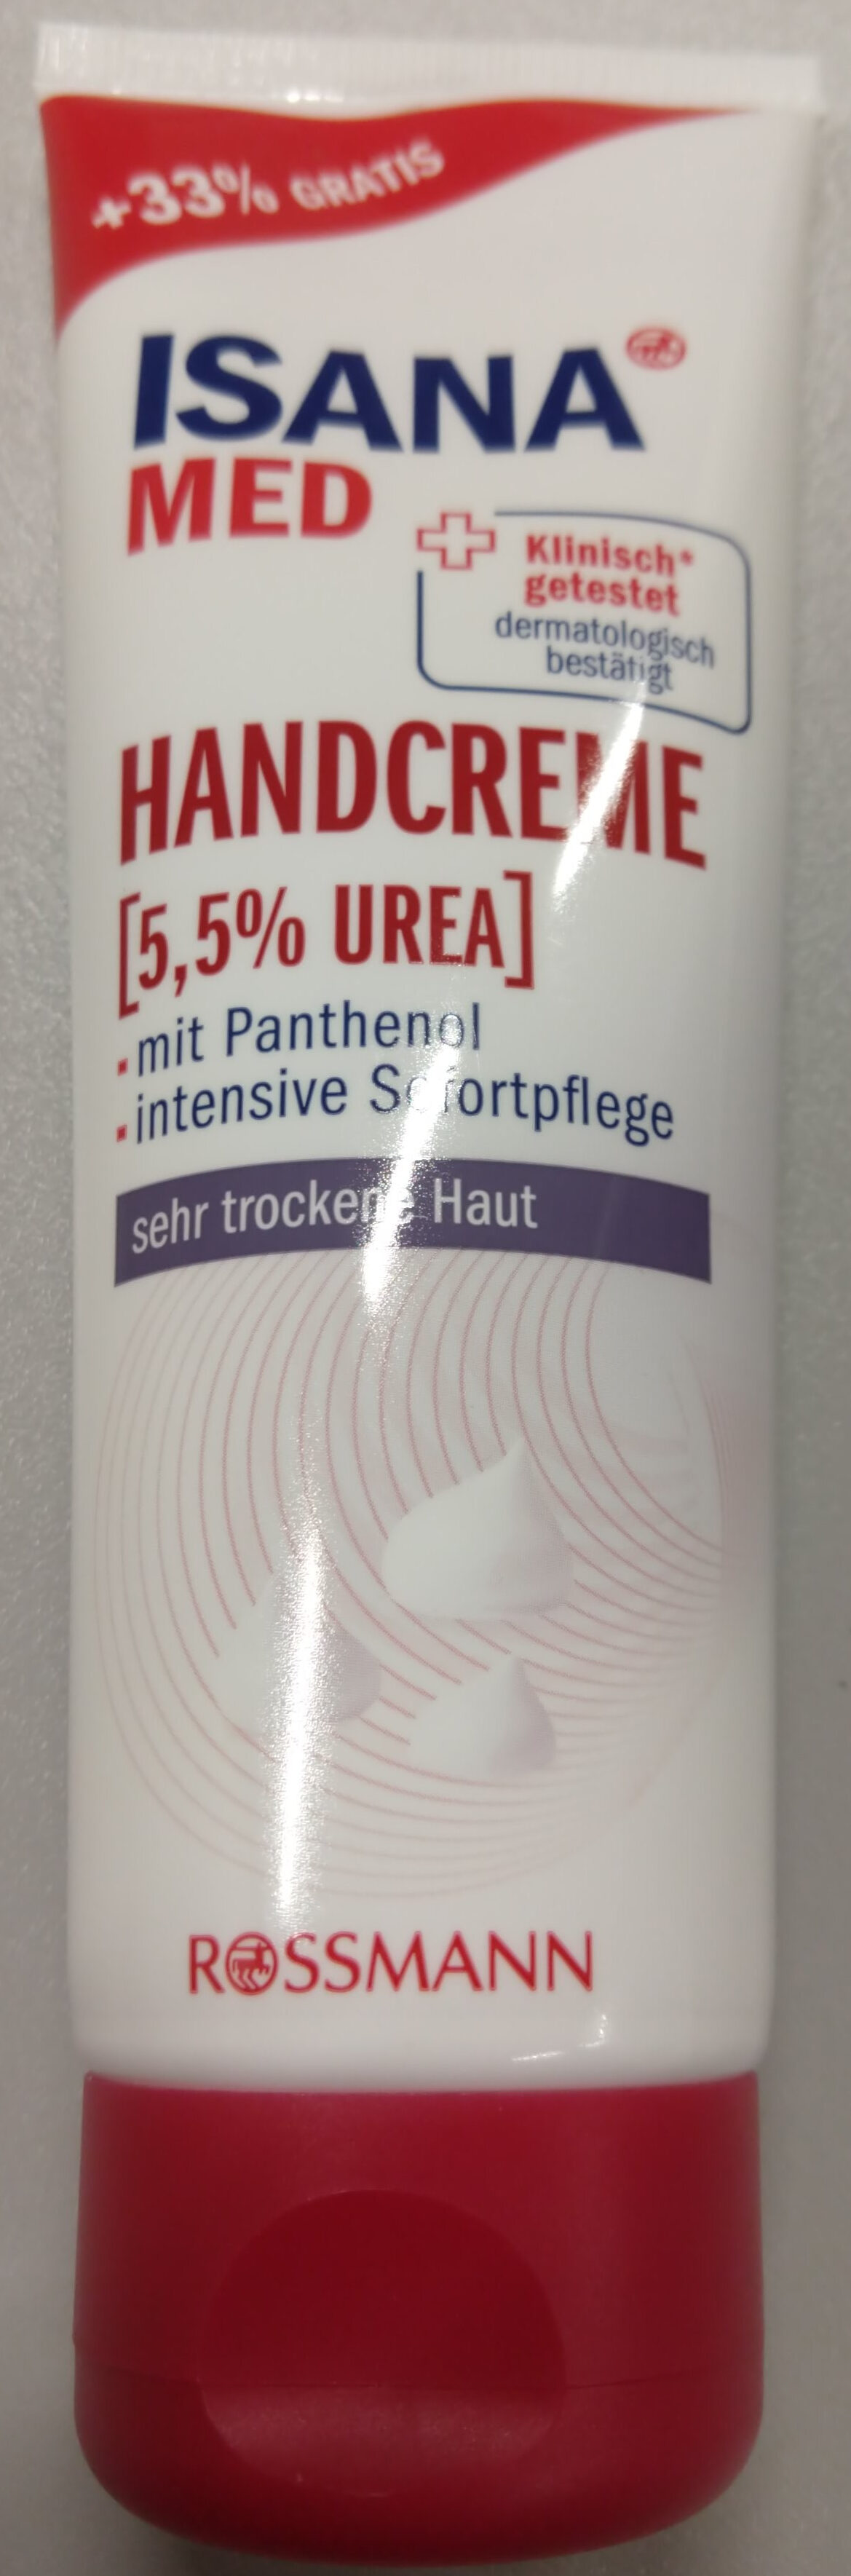 Isana Med Handcreme 5,5% Urea - Tuote - de